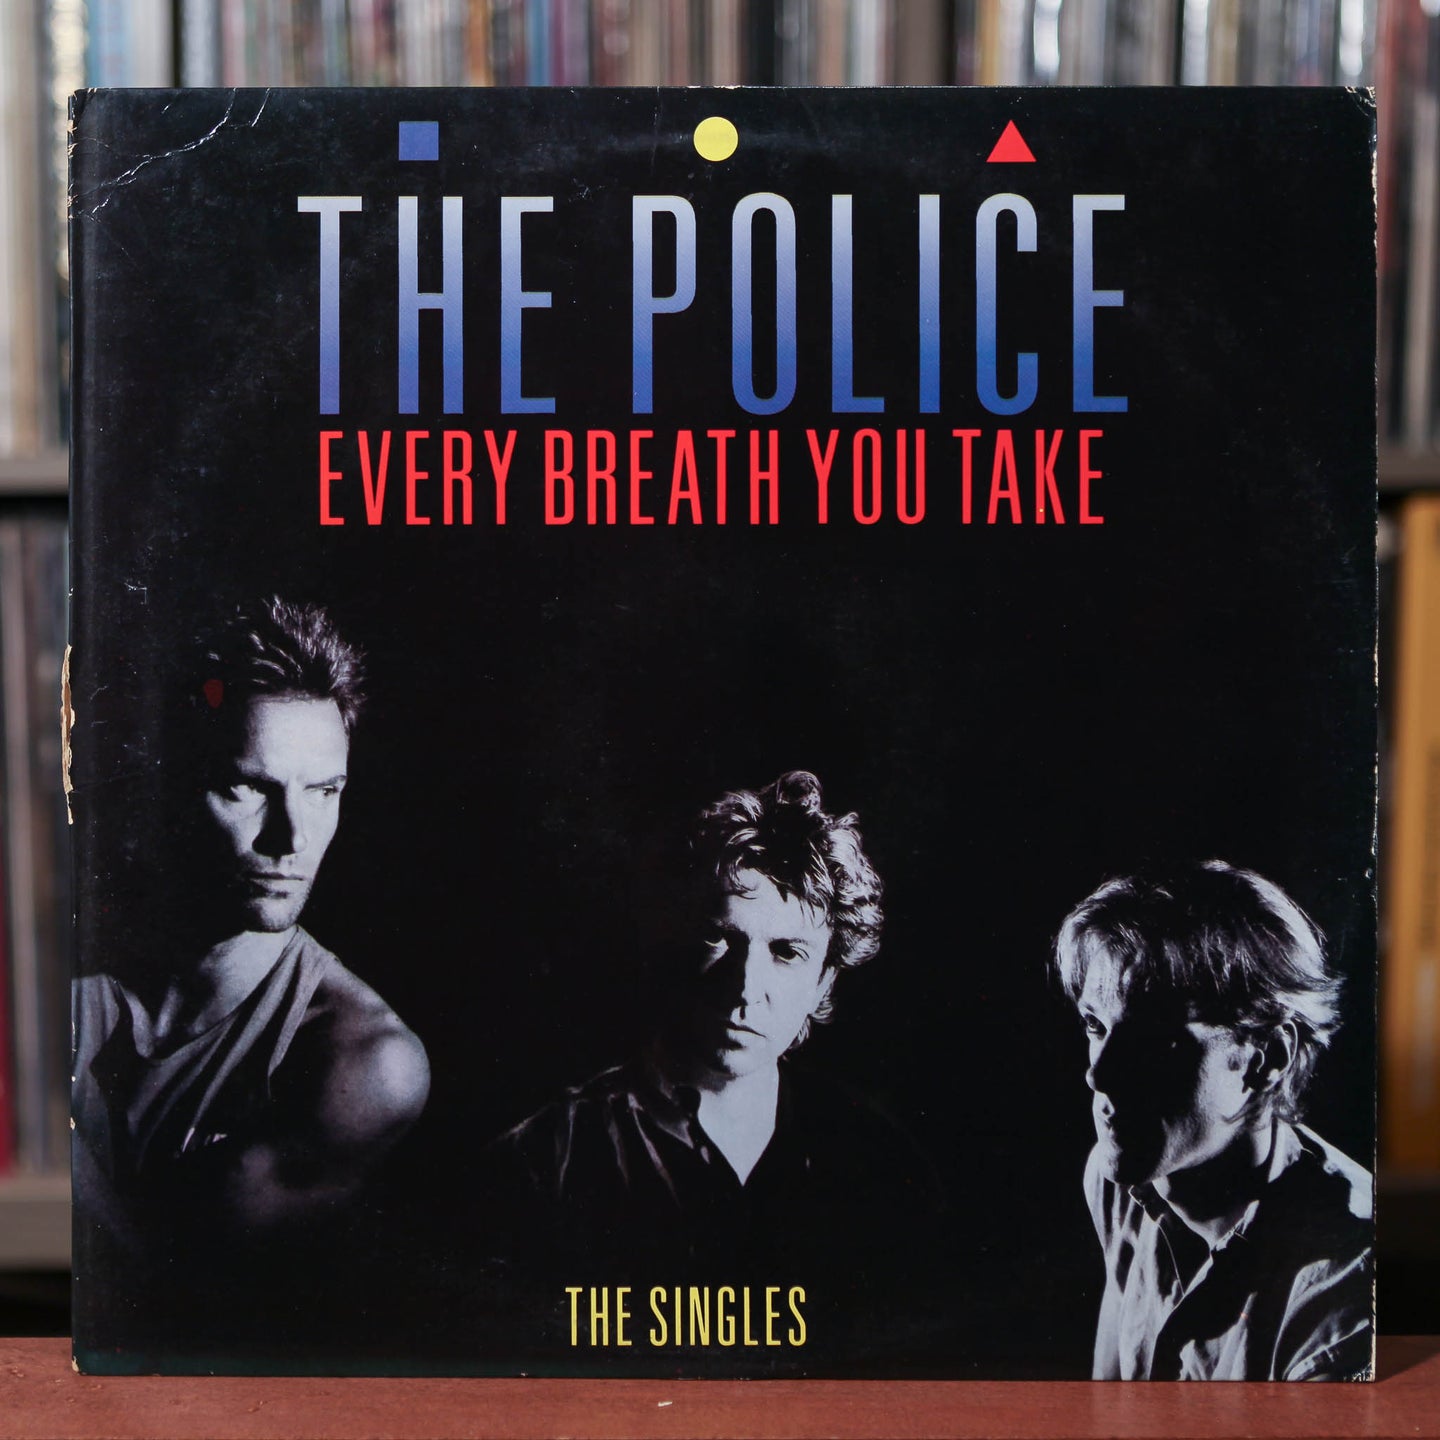 Police - Every Breath You Take (The Singles) - 1986 A&M, VG/VG